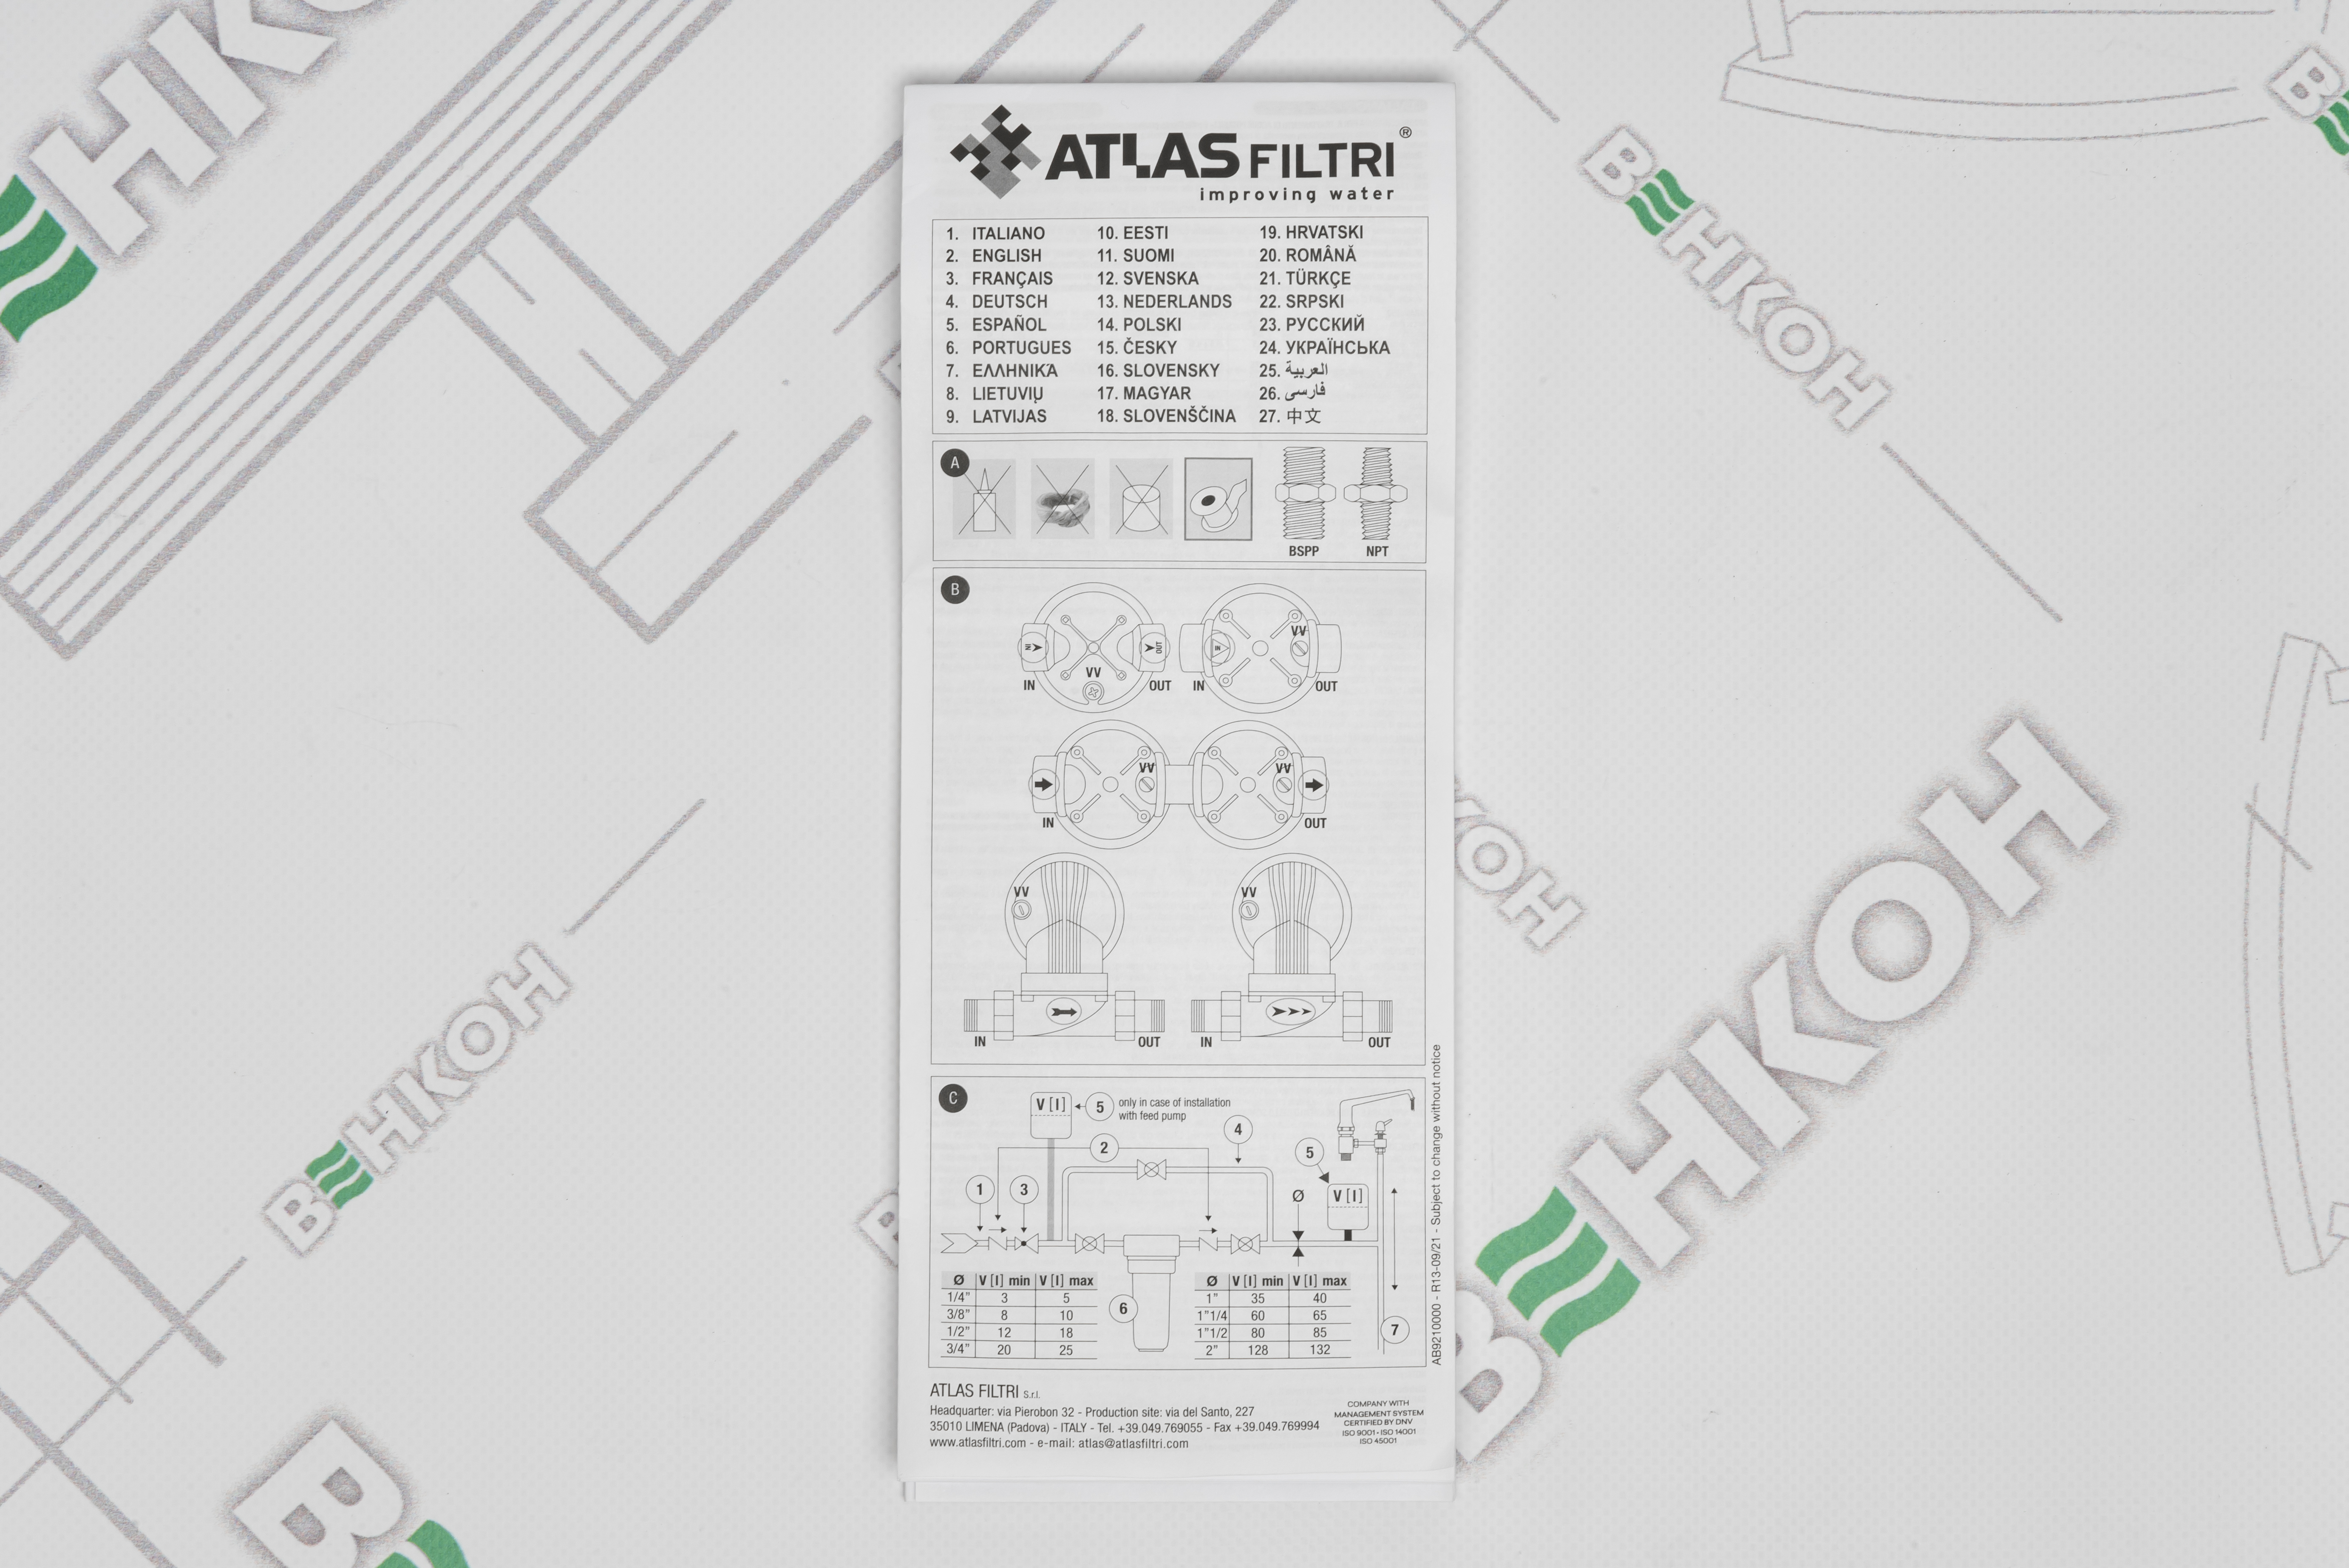 Фильтр Atlas Filtri DUPLEX PLUS 3P BFO SX TS 1 (RA112T711) обзор - фото 8